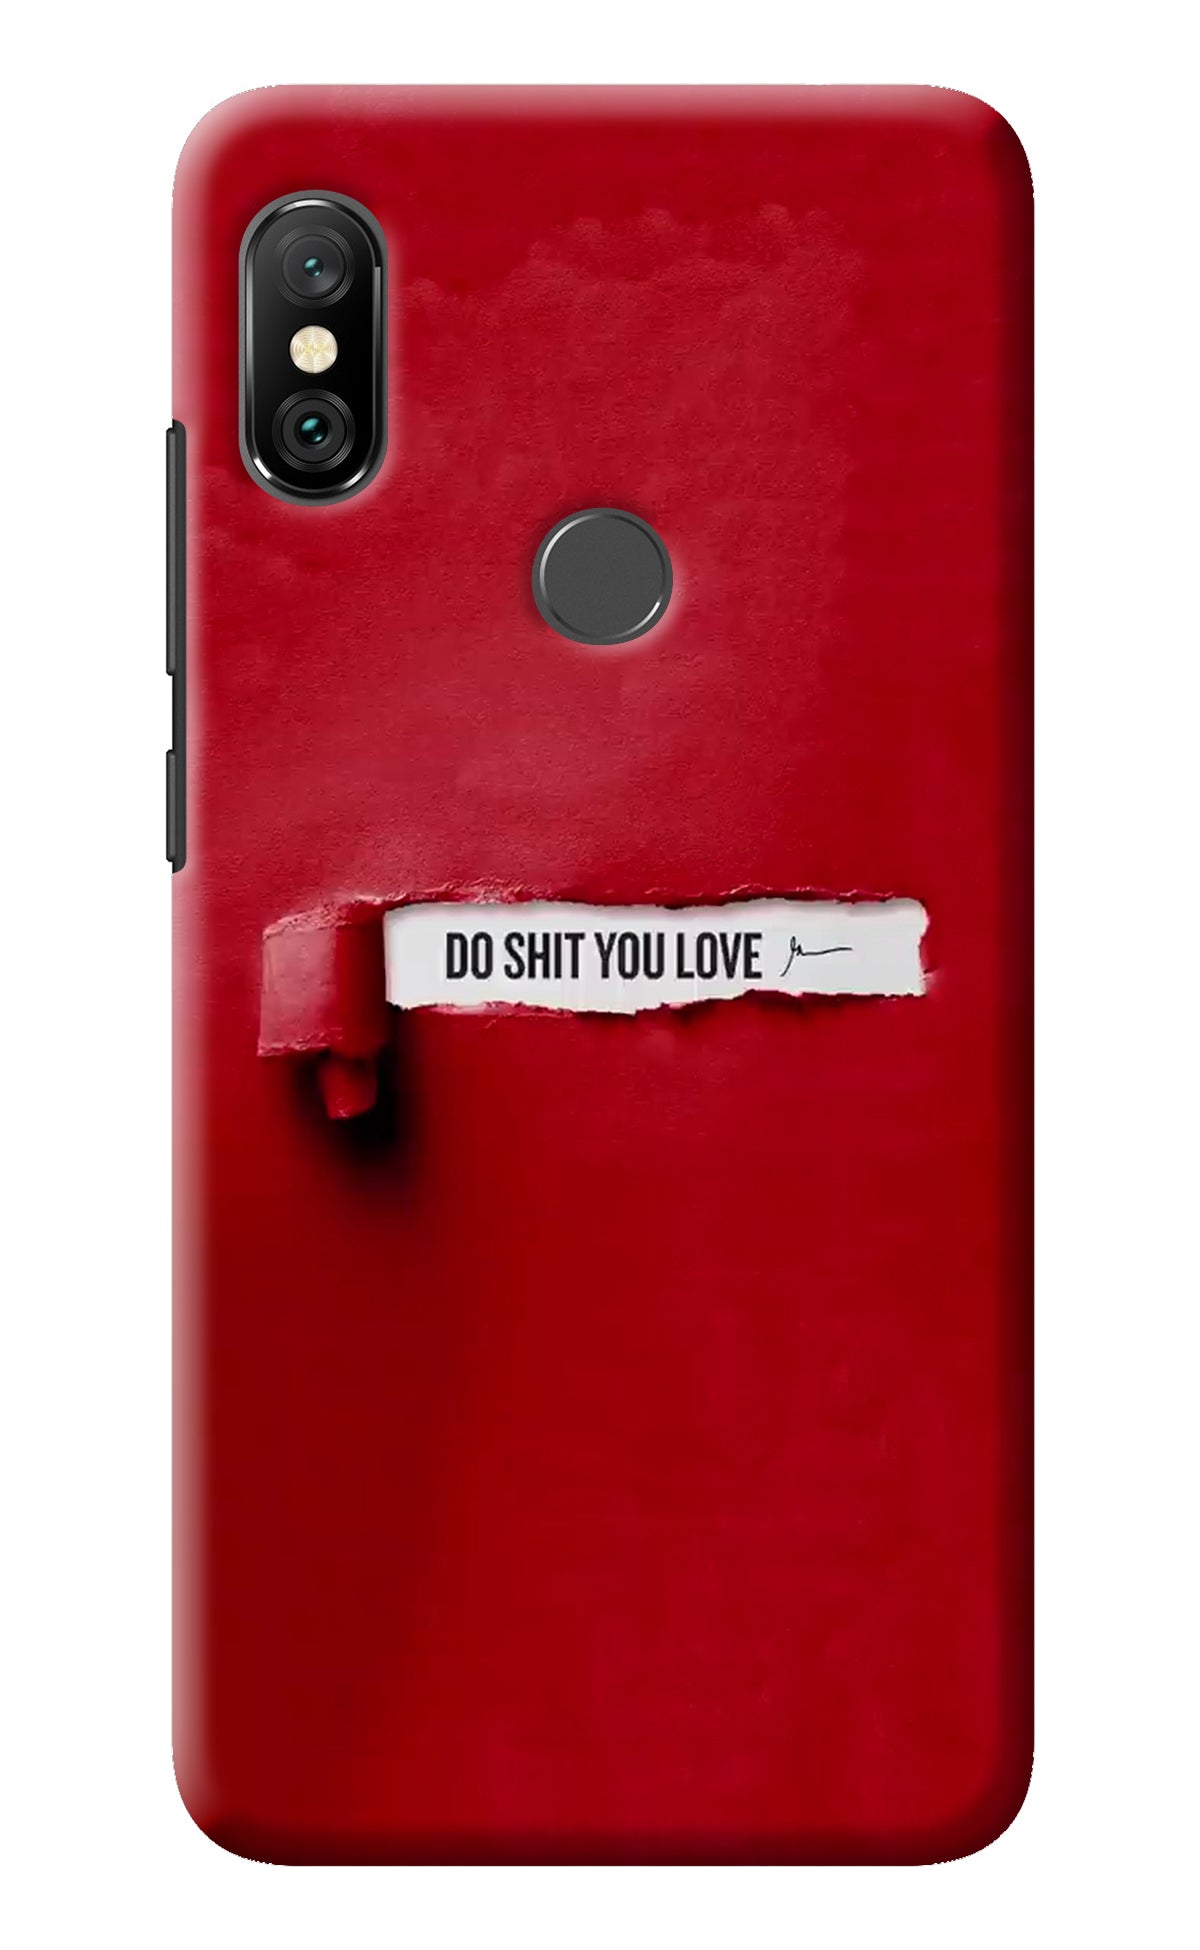 Do Shit You Love Redmi Note 6 Pro Back Cover